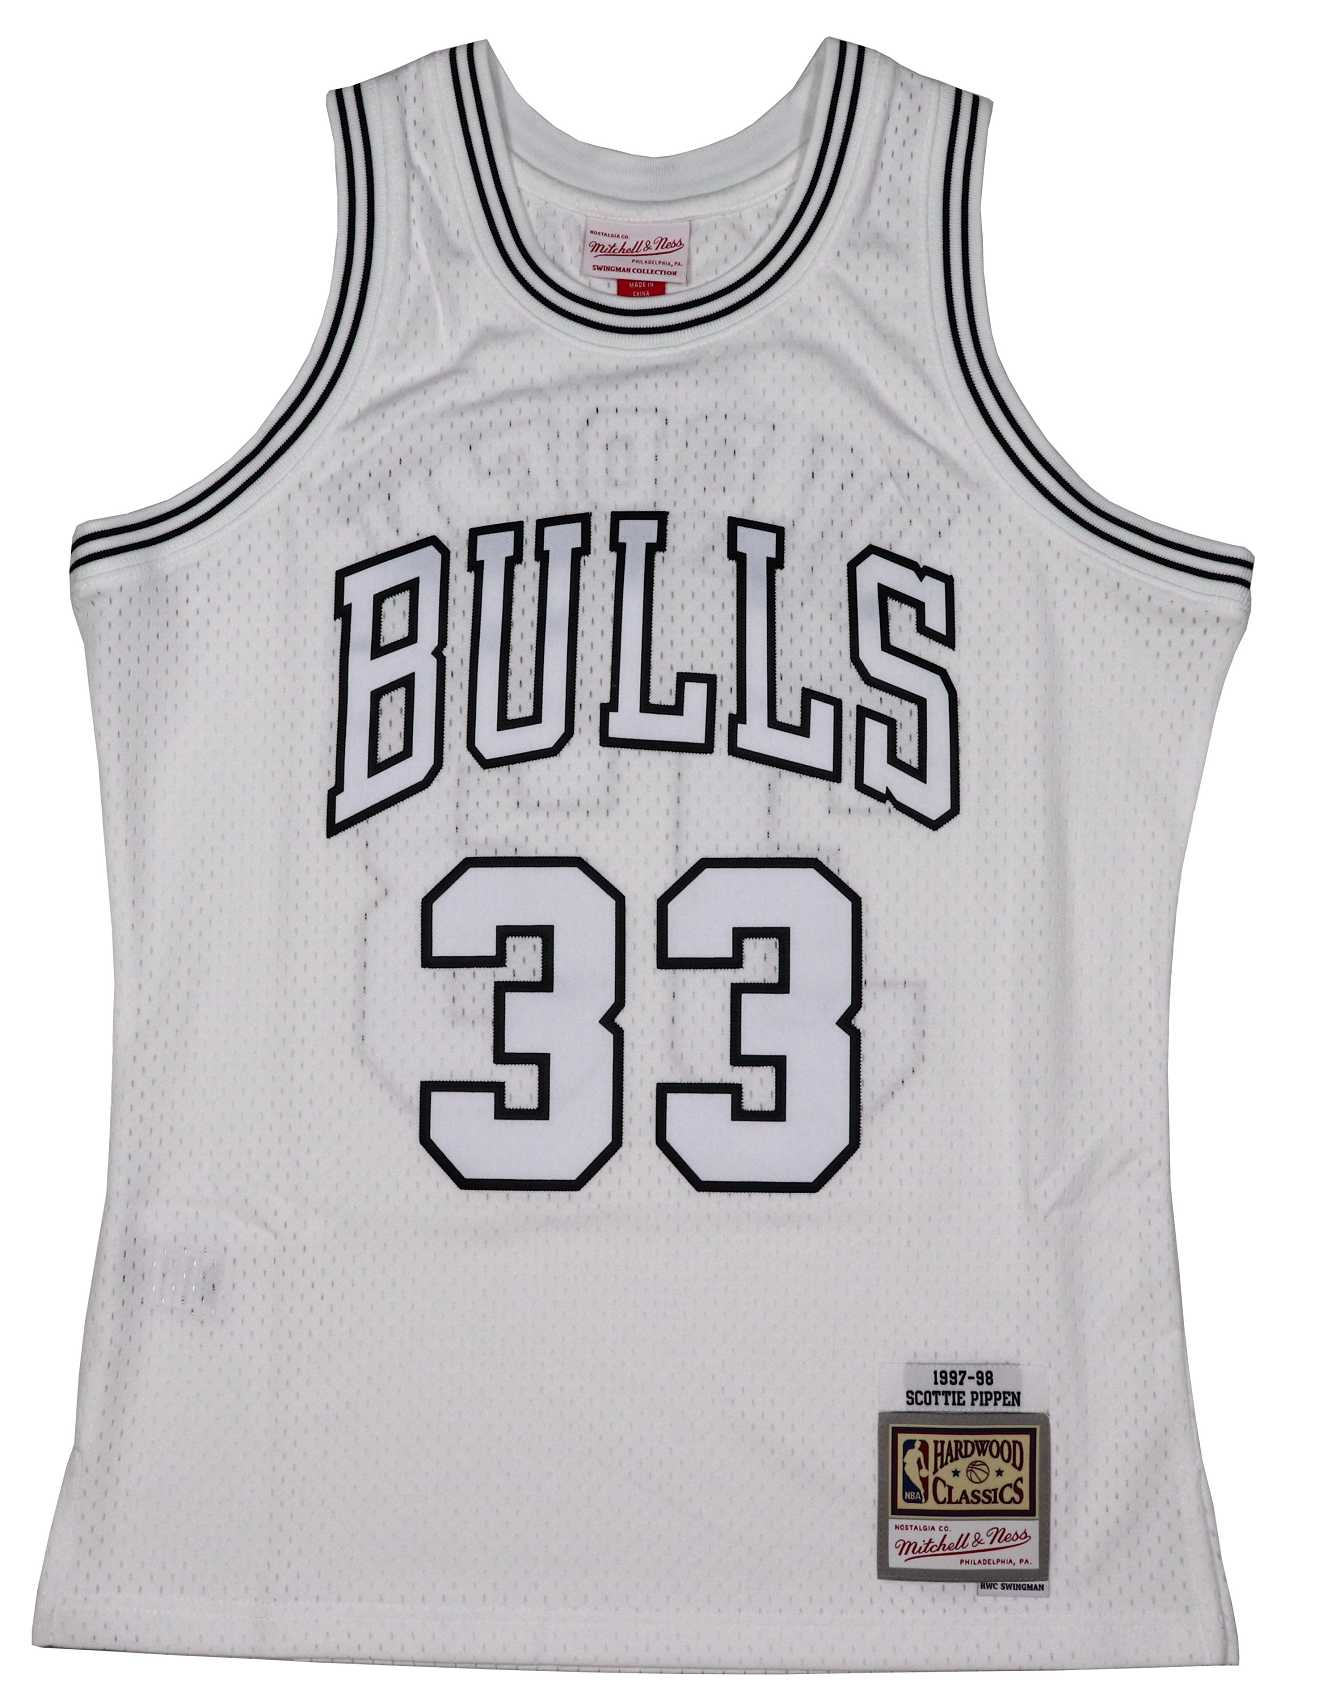 Scottie Pippen #33 Chicago Bulls NBA White Swingman Jersey Mitchell & Ness